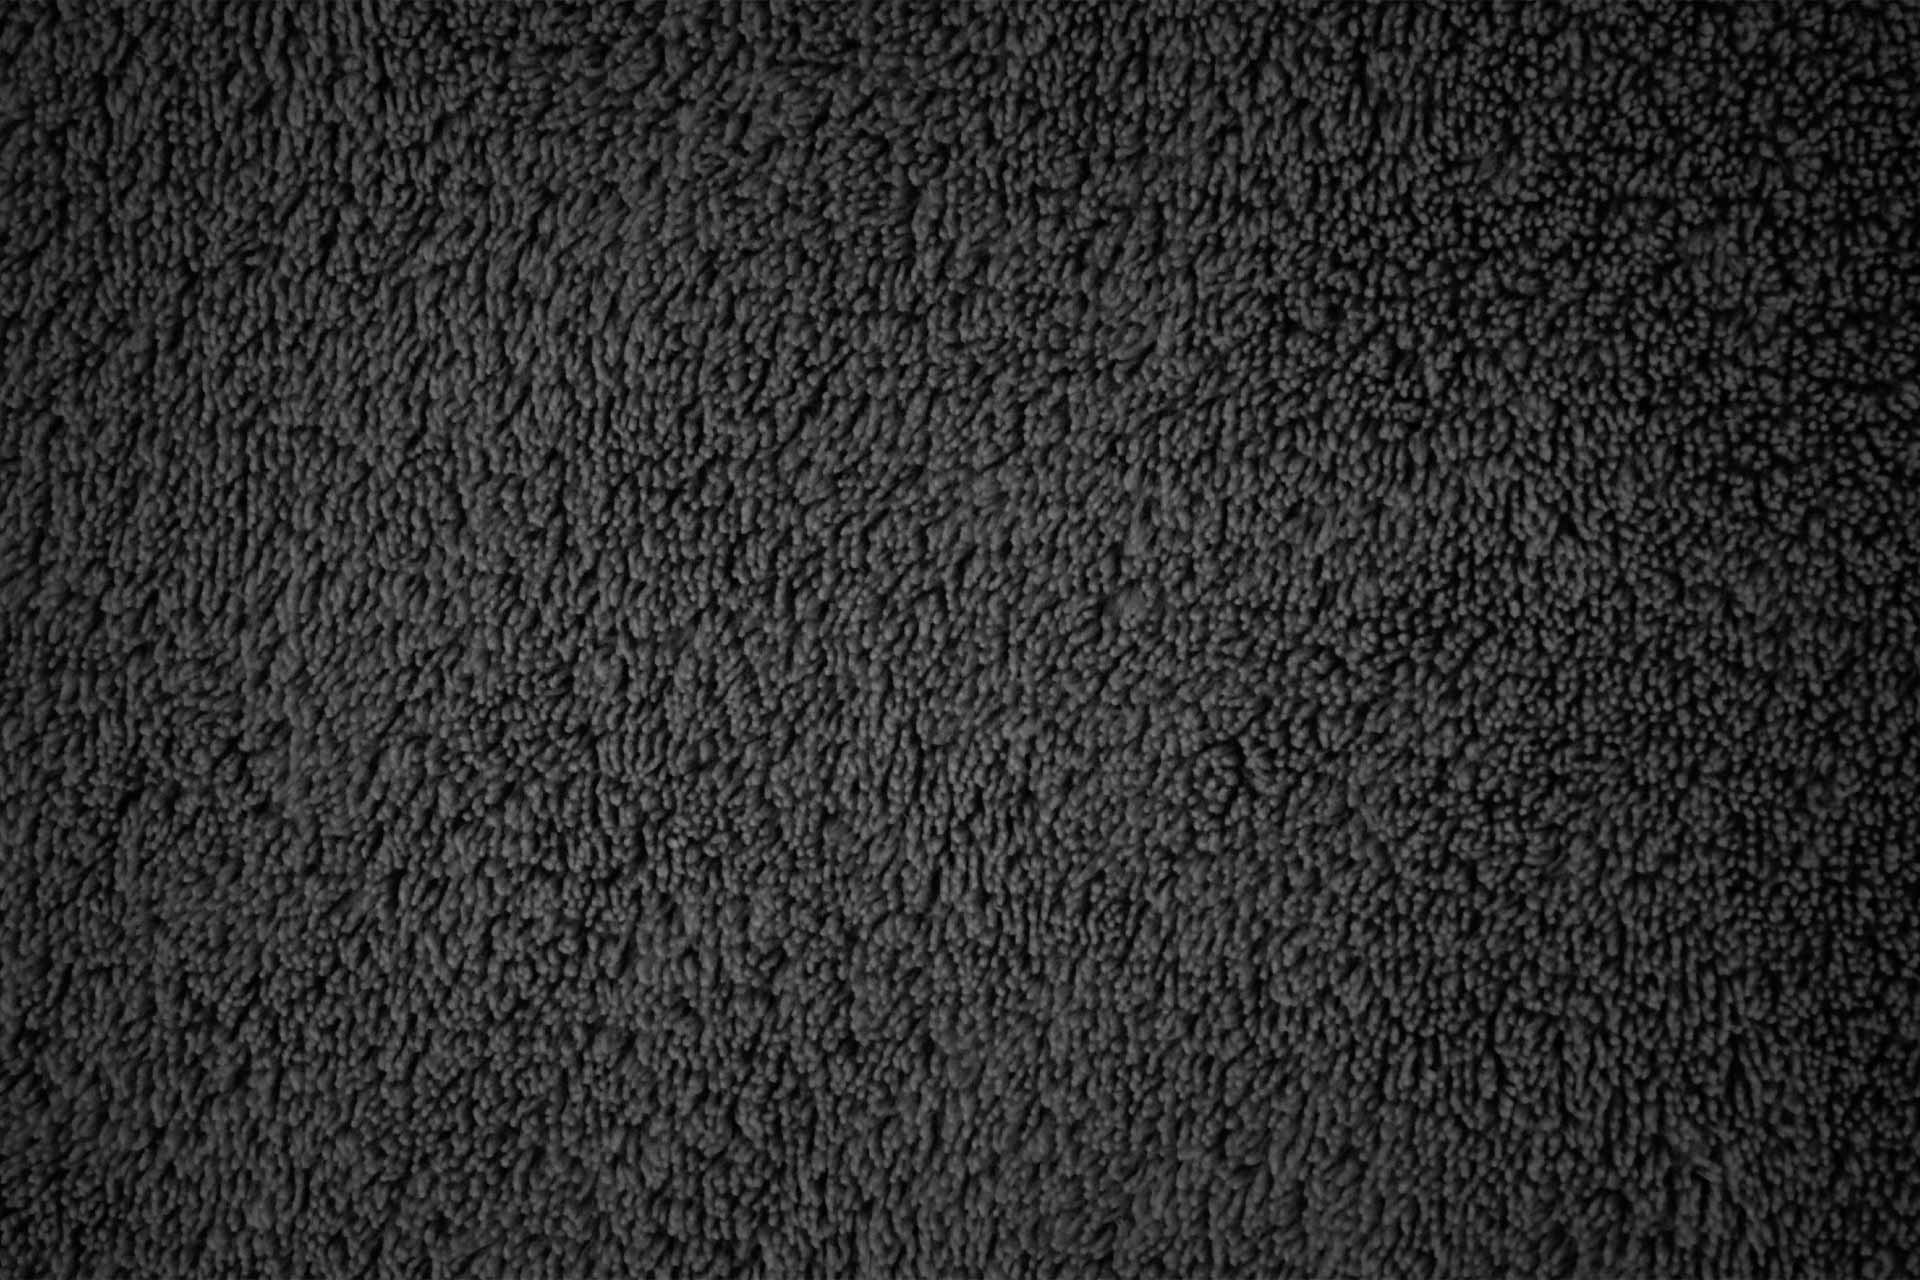 background texture black rug